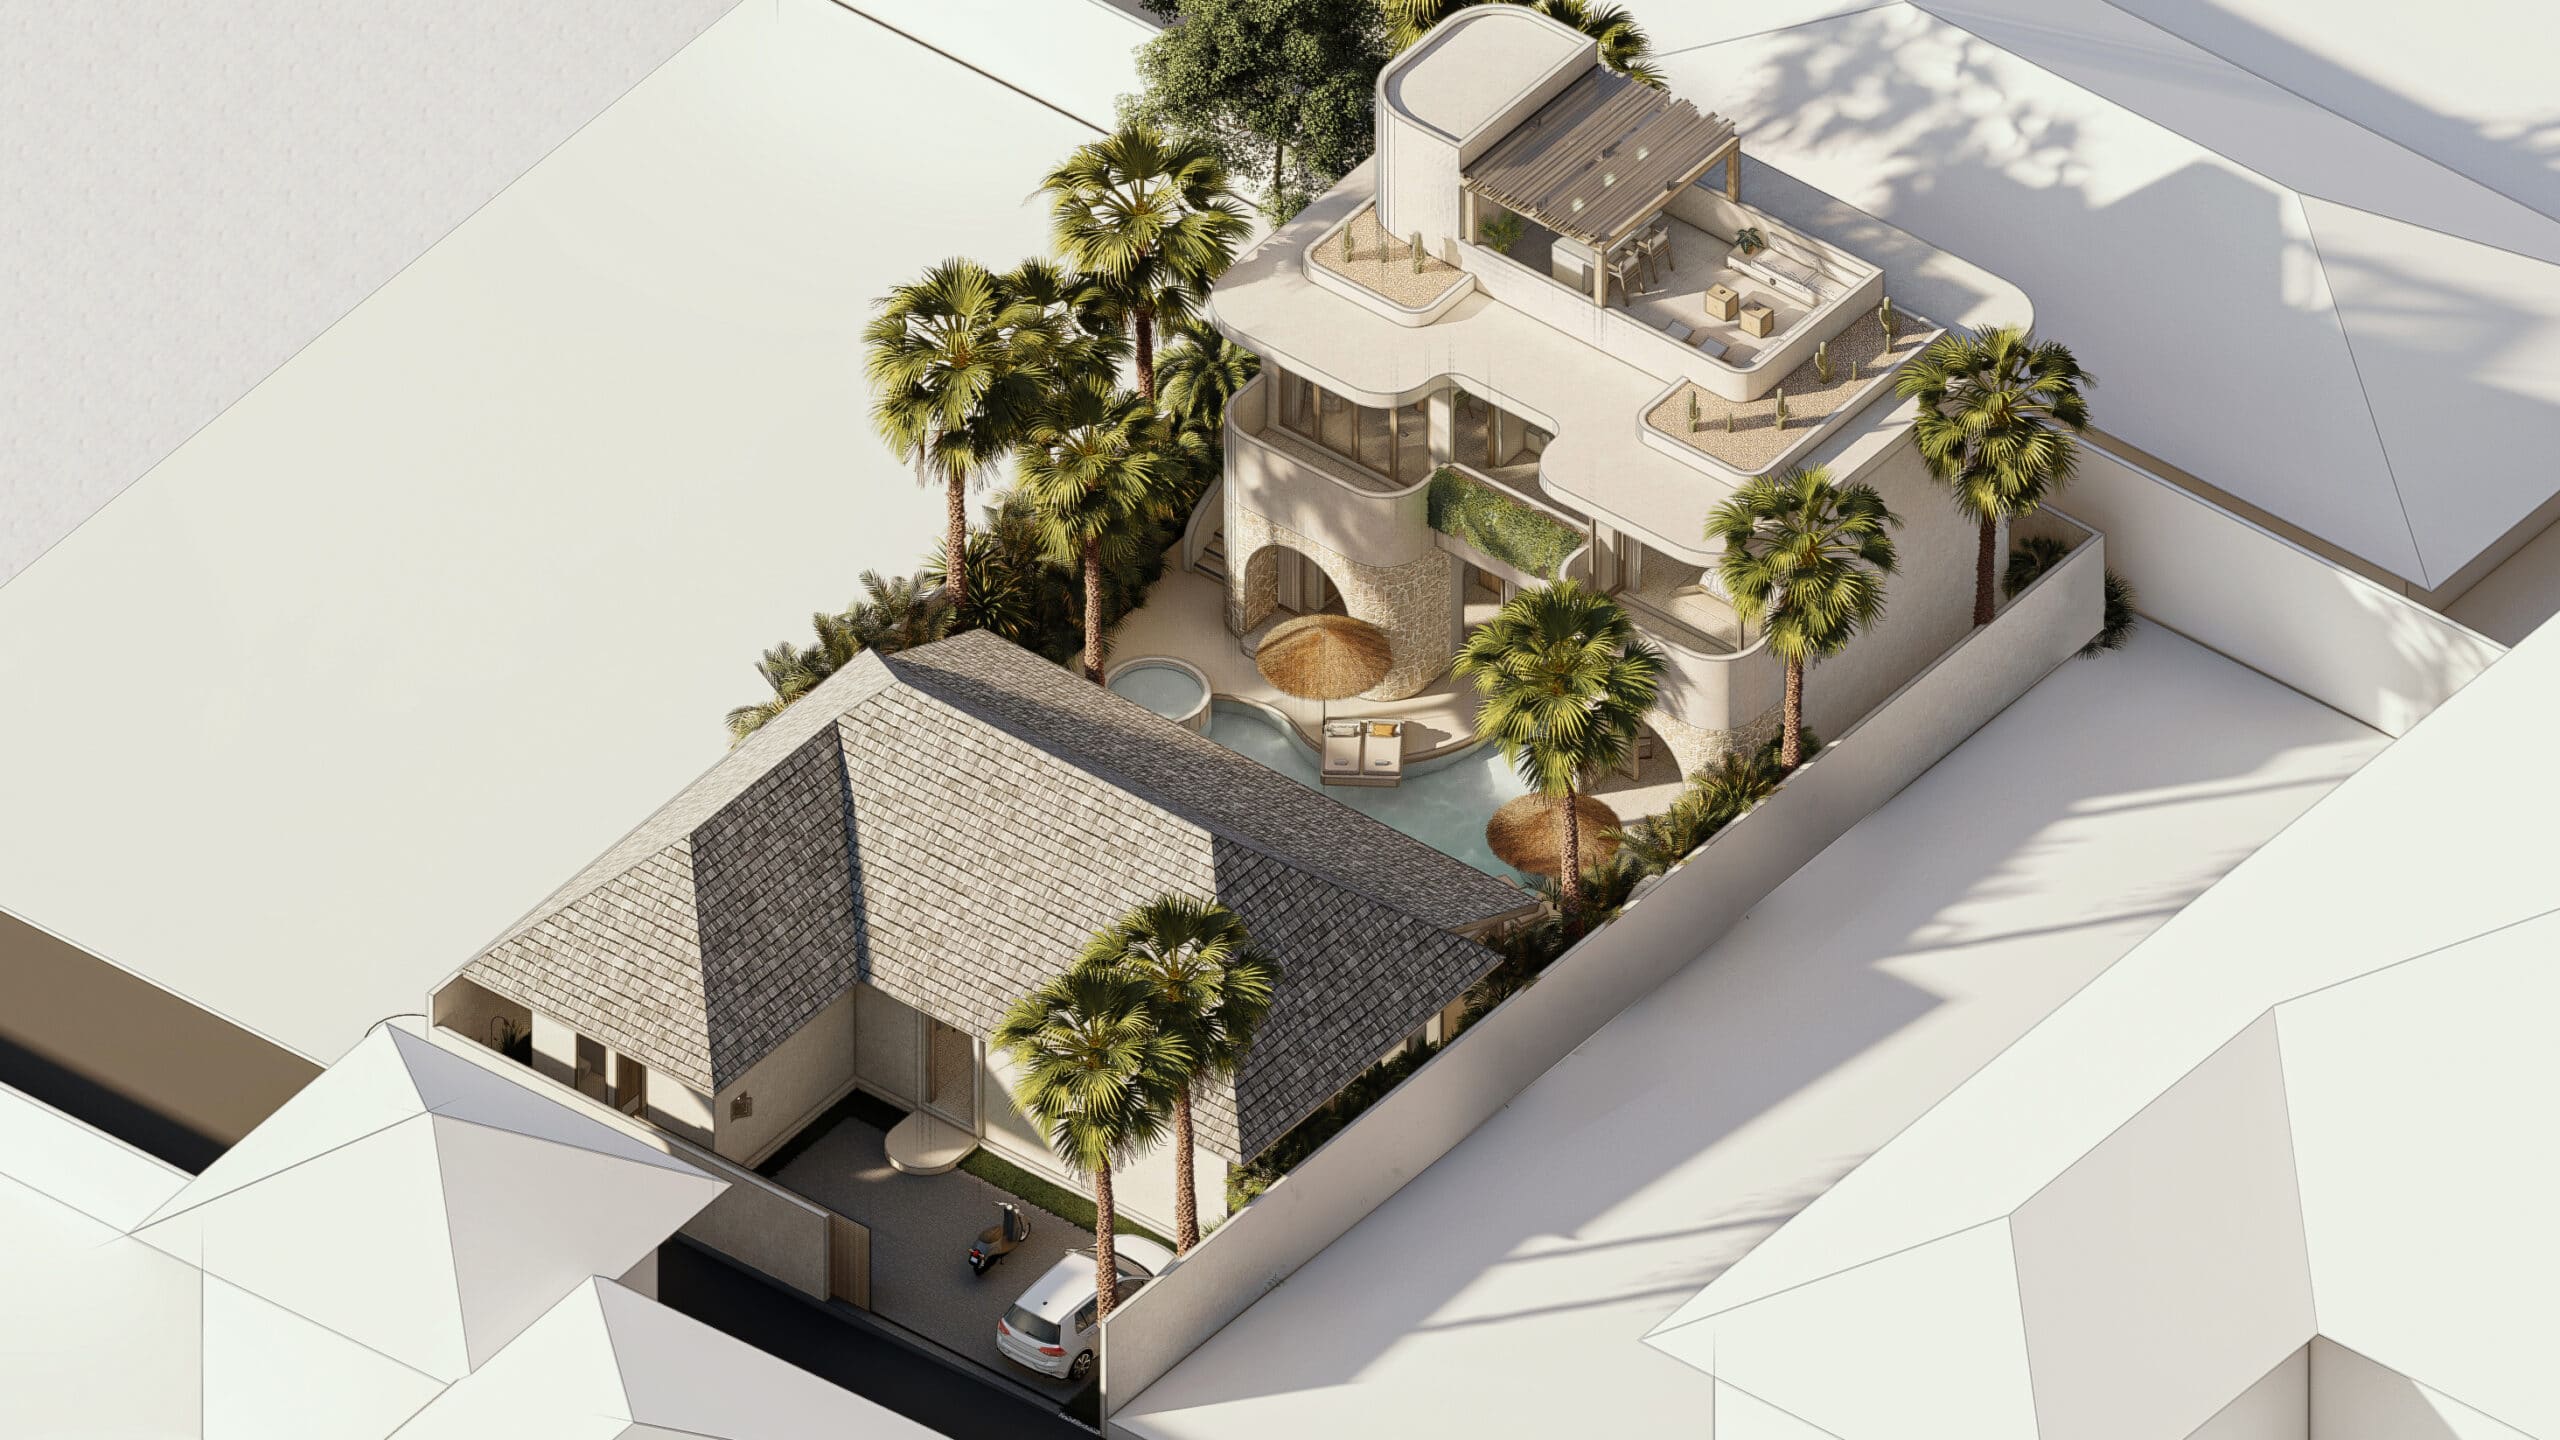 Design Assembly - Michael Utomo Villa - Bali Architect - Interior Design - Bali Villa - Building Facade